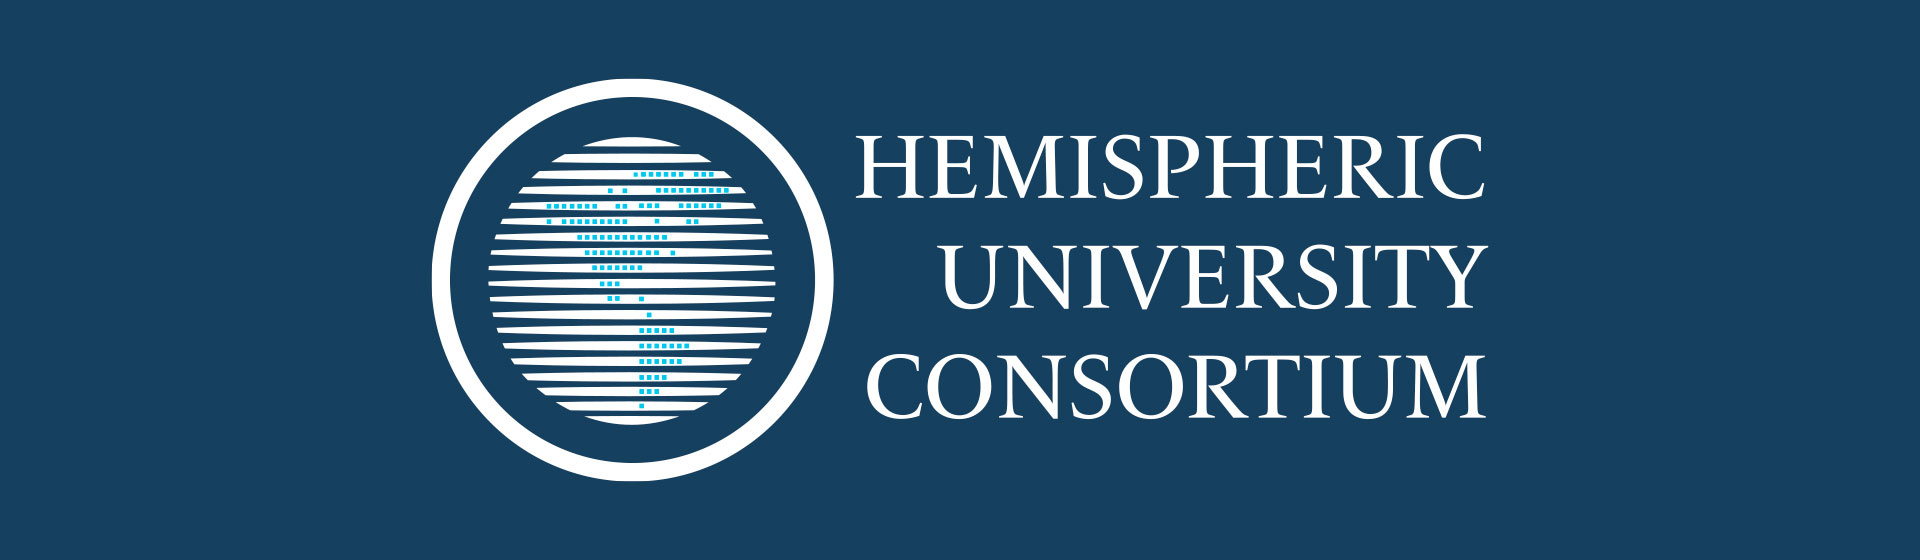 Hemispheric University Consortium celebra su tercer año